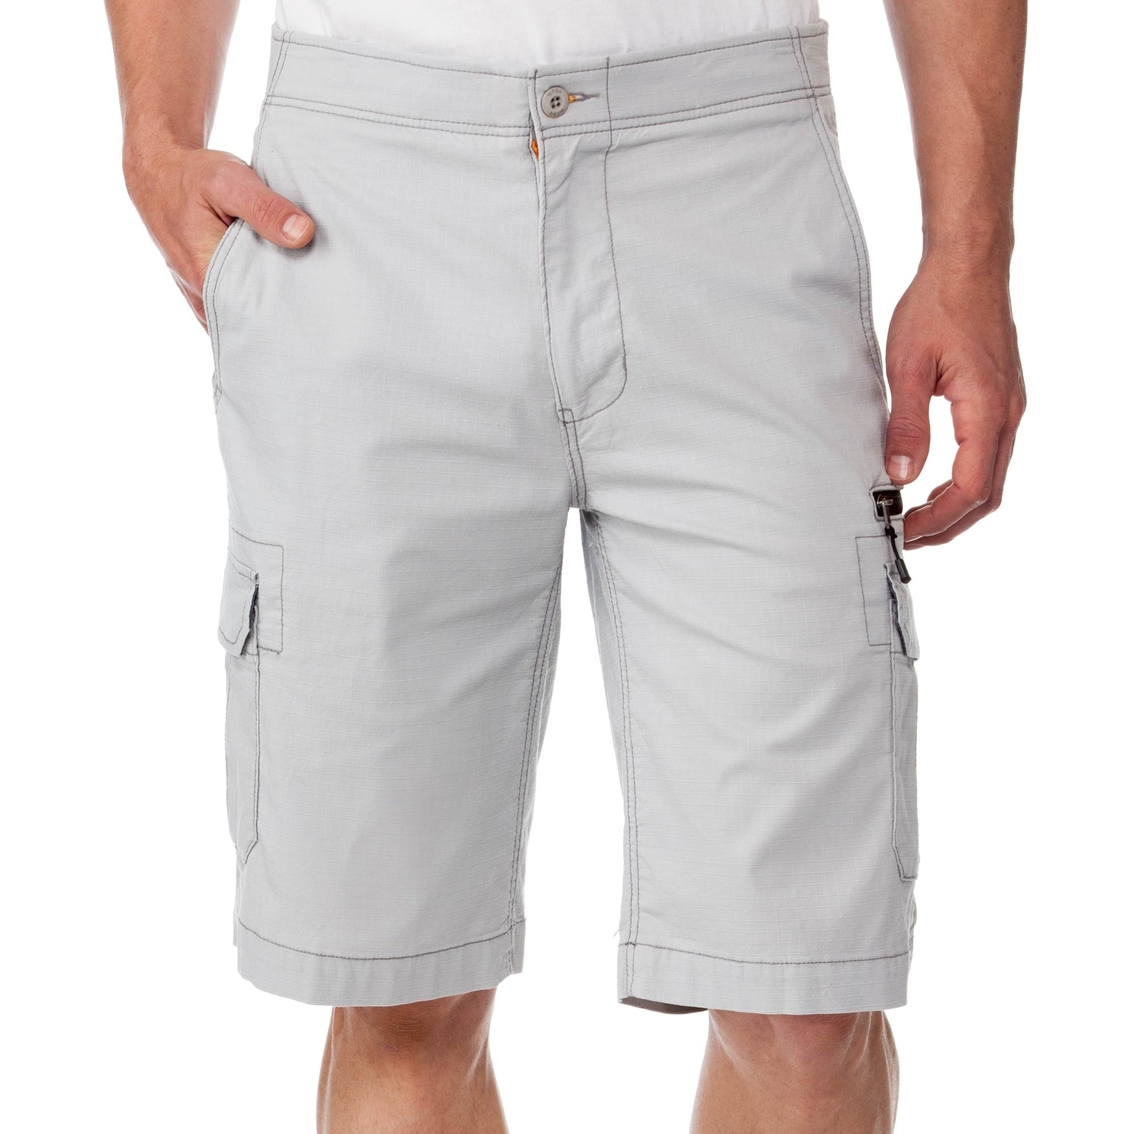 Wearfirst Free Band Zipper Pocket Cargo Shorts | Shorts | Apparel ...